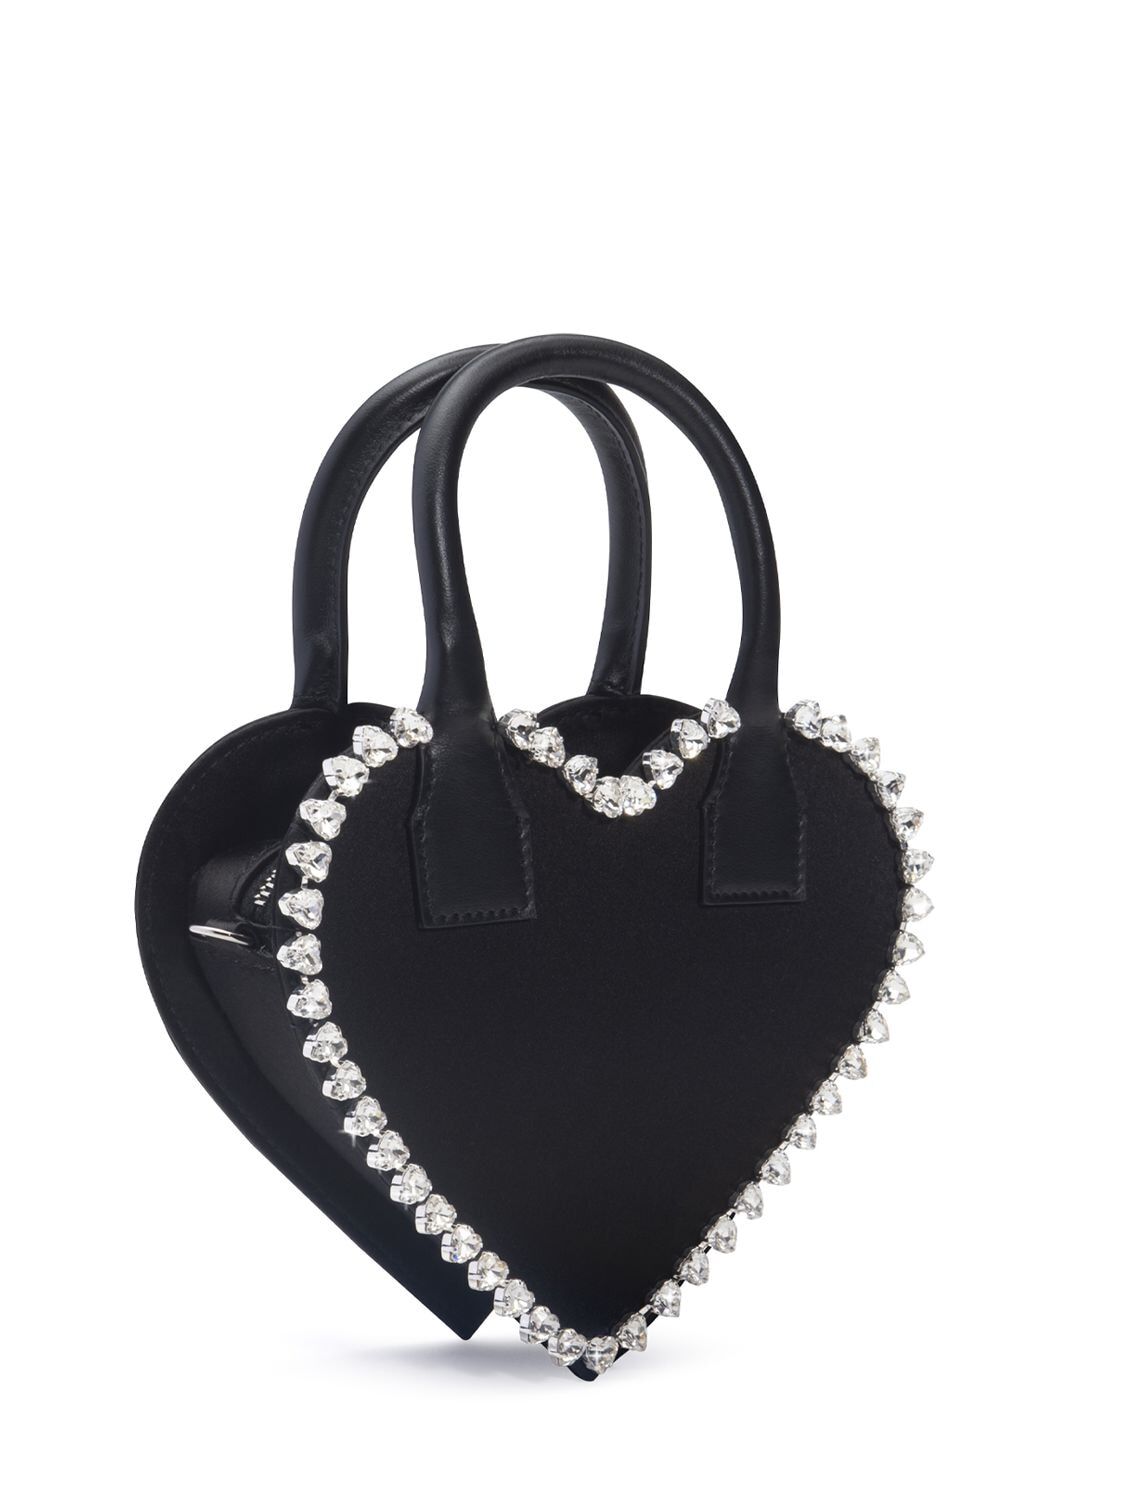 MACH & MACH Small Audrey Heart Satin Top Handle Bag in black